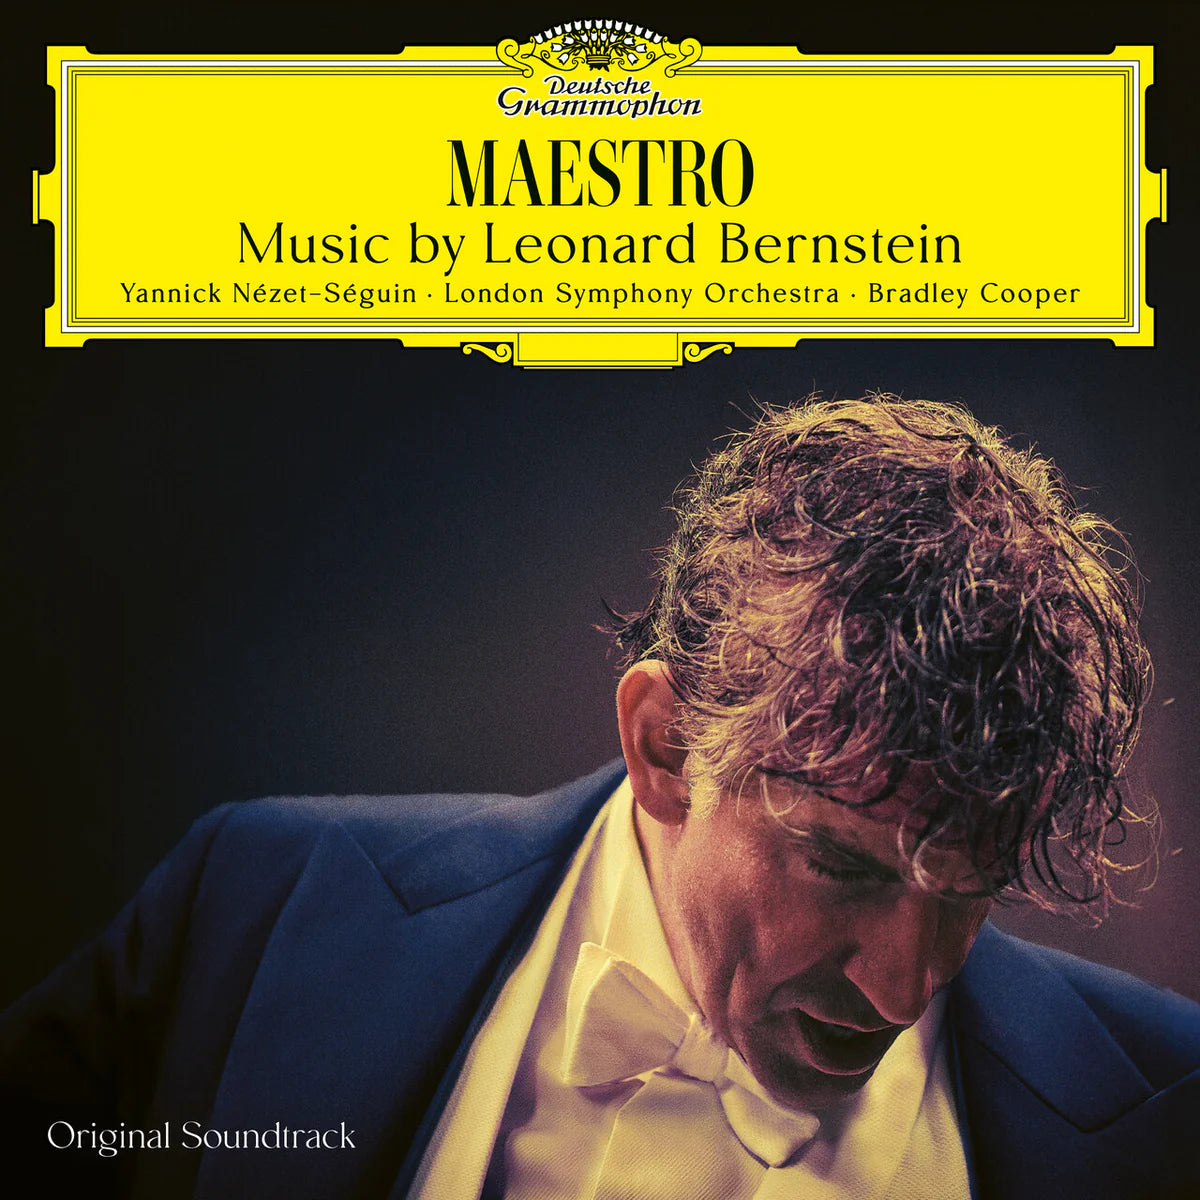 London Symphony Orchestra, Yannick-Nézet-Ségui - Maestro: Music by Leonard Bernstein: CD